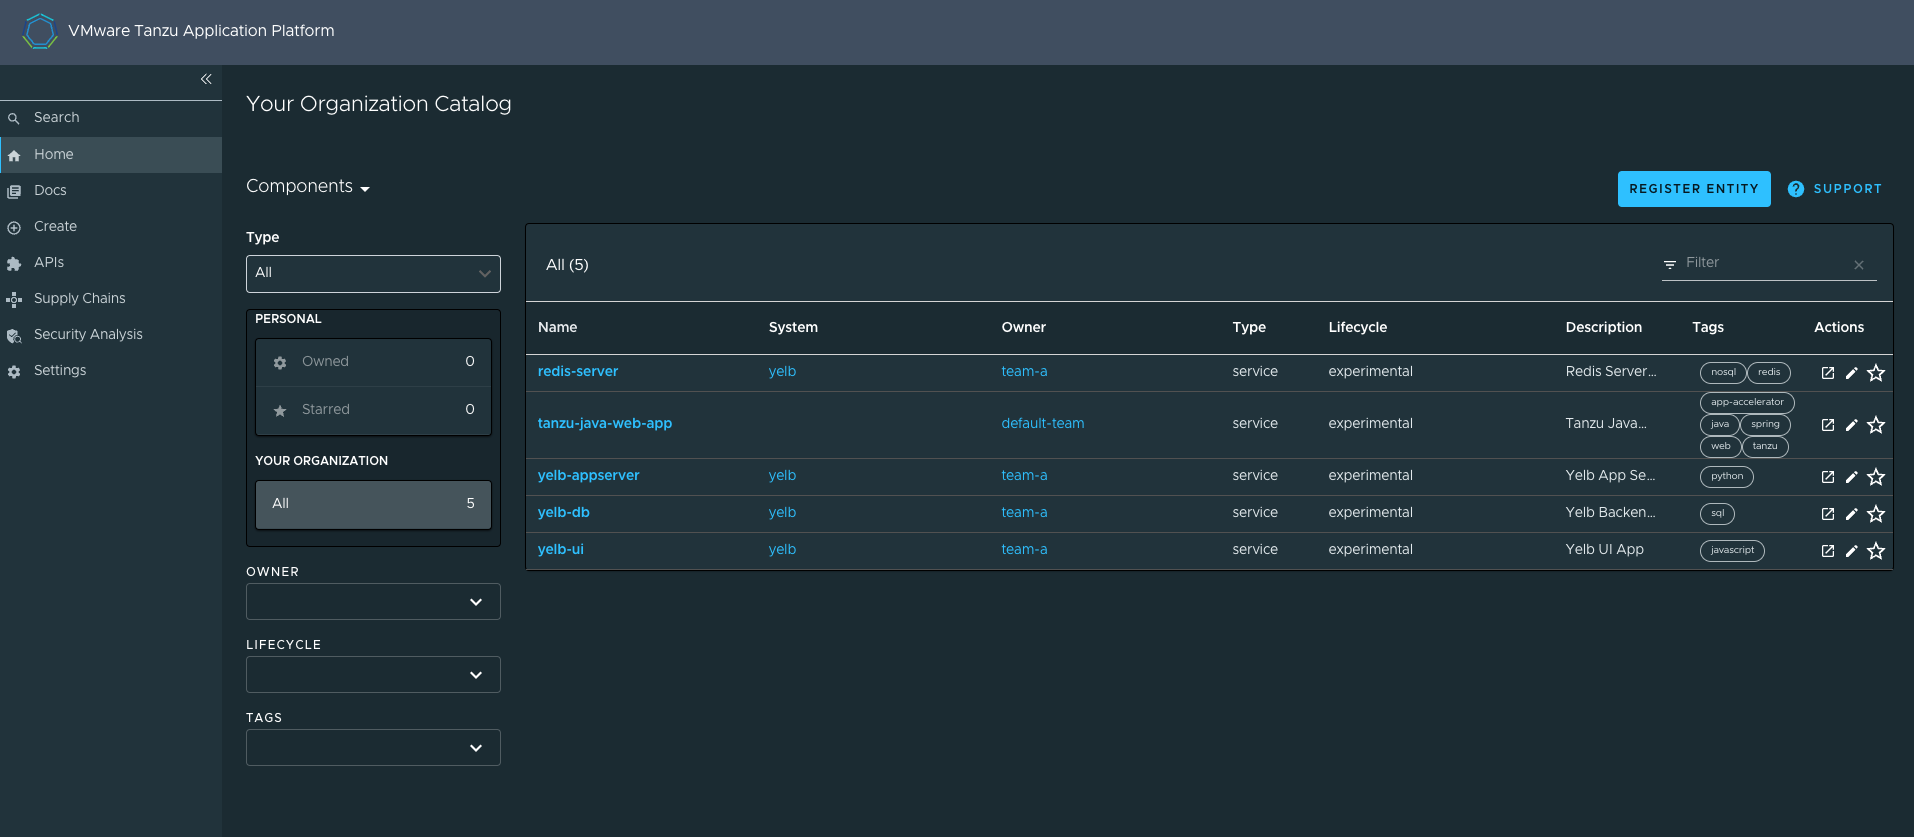 Screenshot of a Tanzu Application Platform catalog displayed within Tanzu Developer Portal.